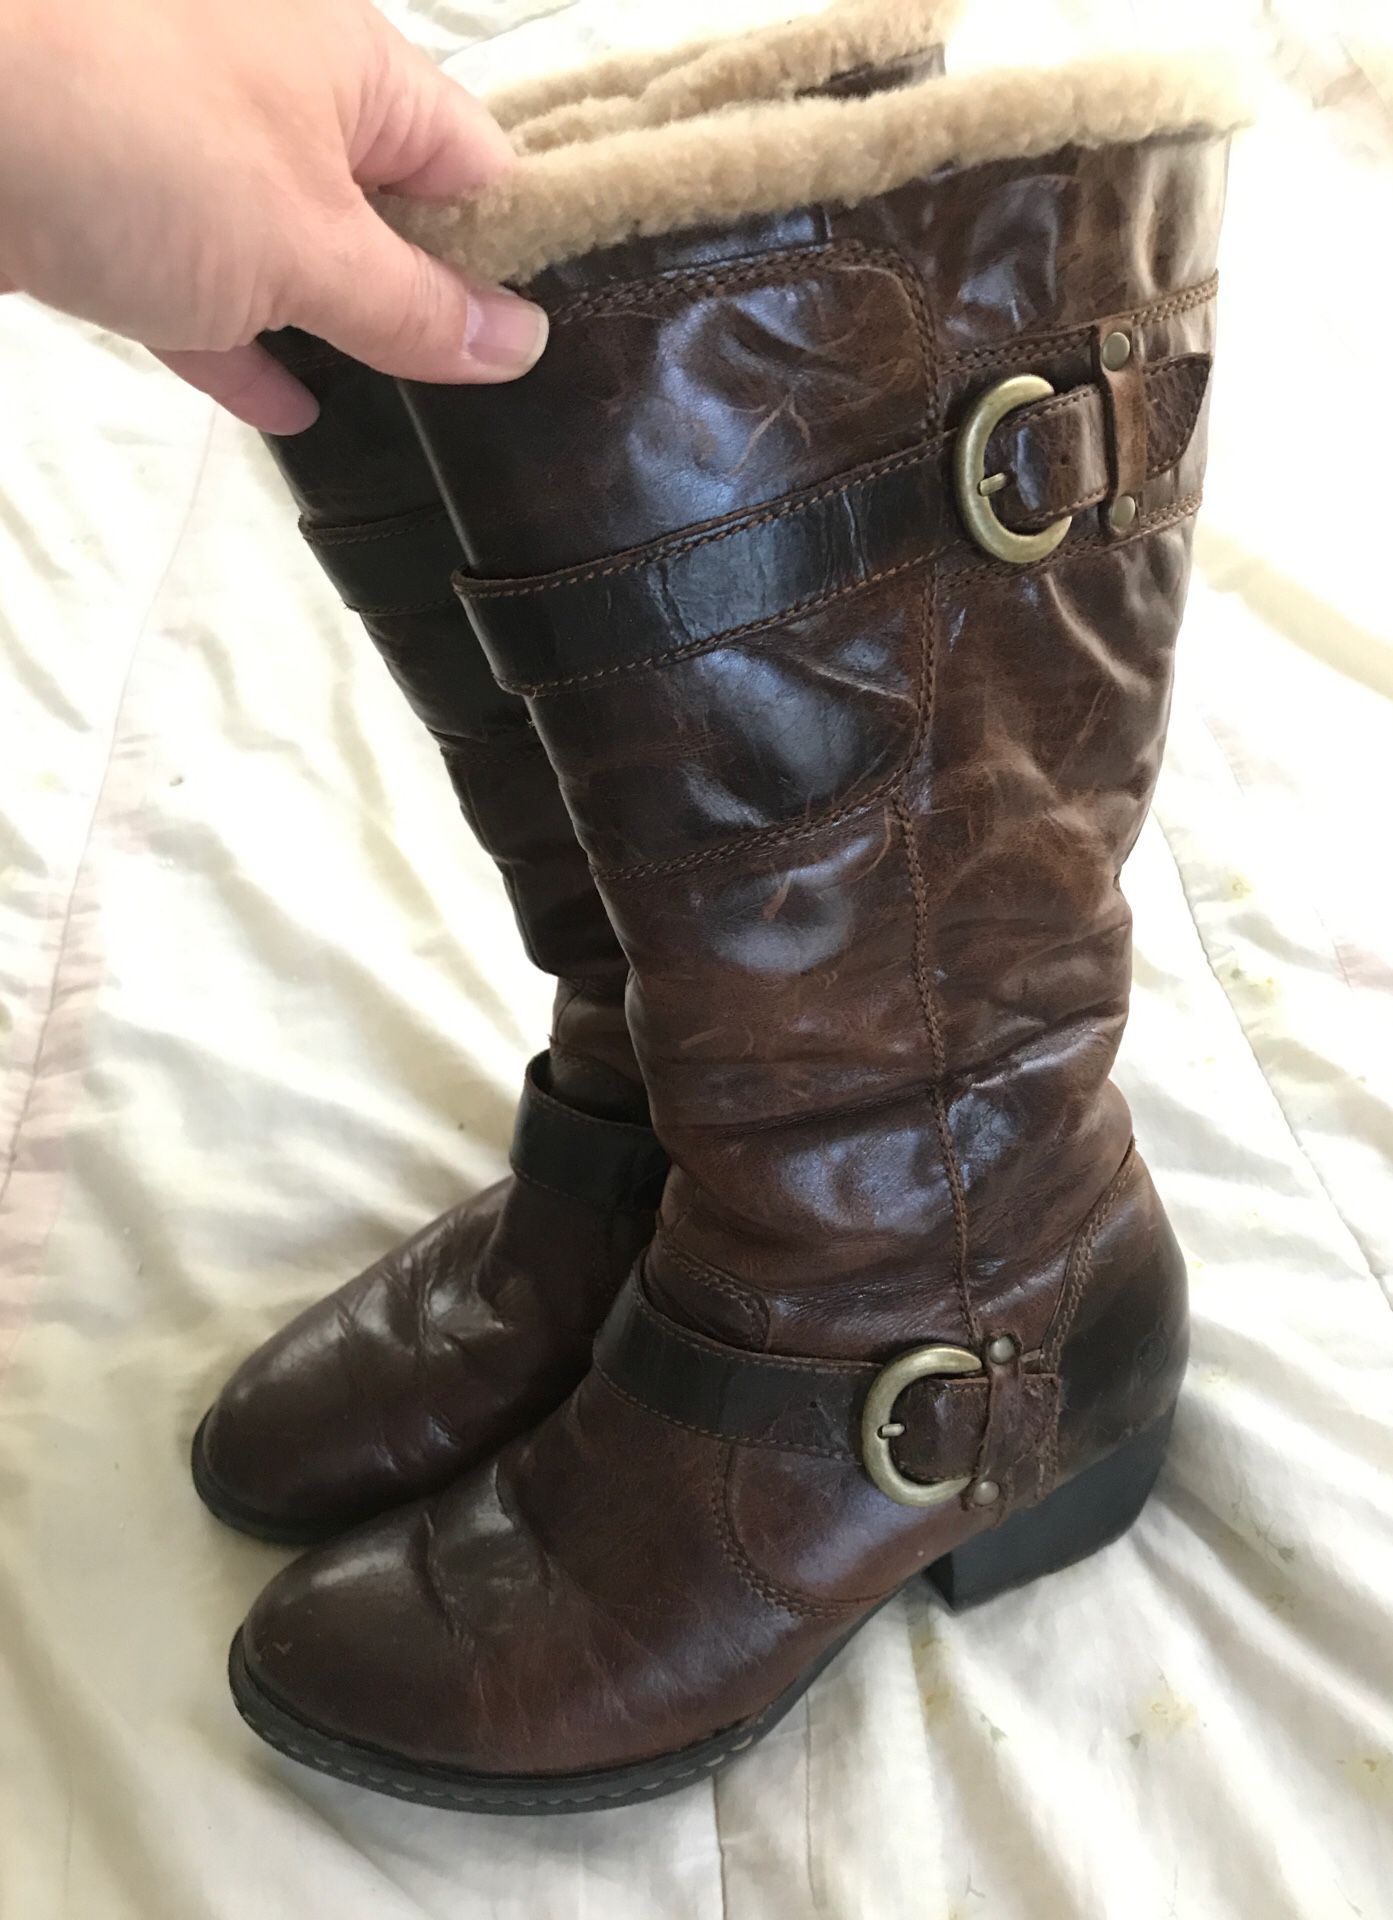 Bjorn boots size 7